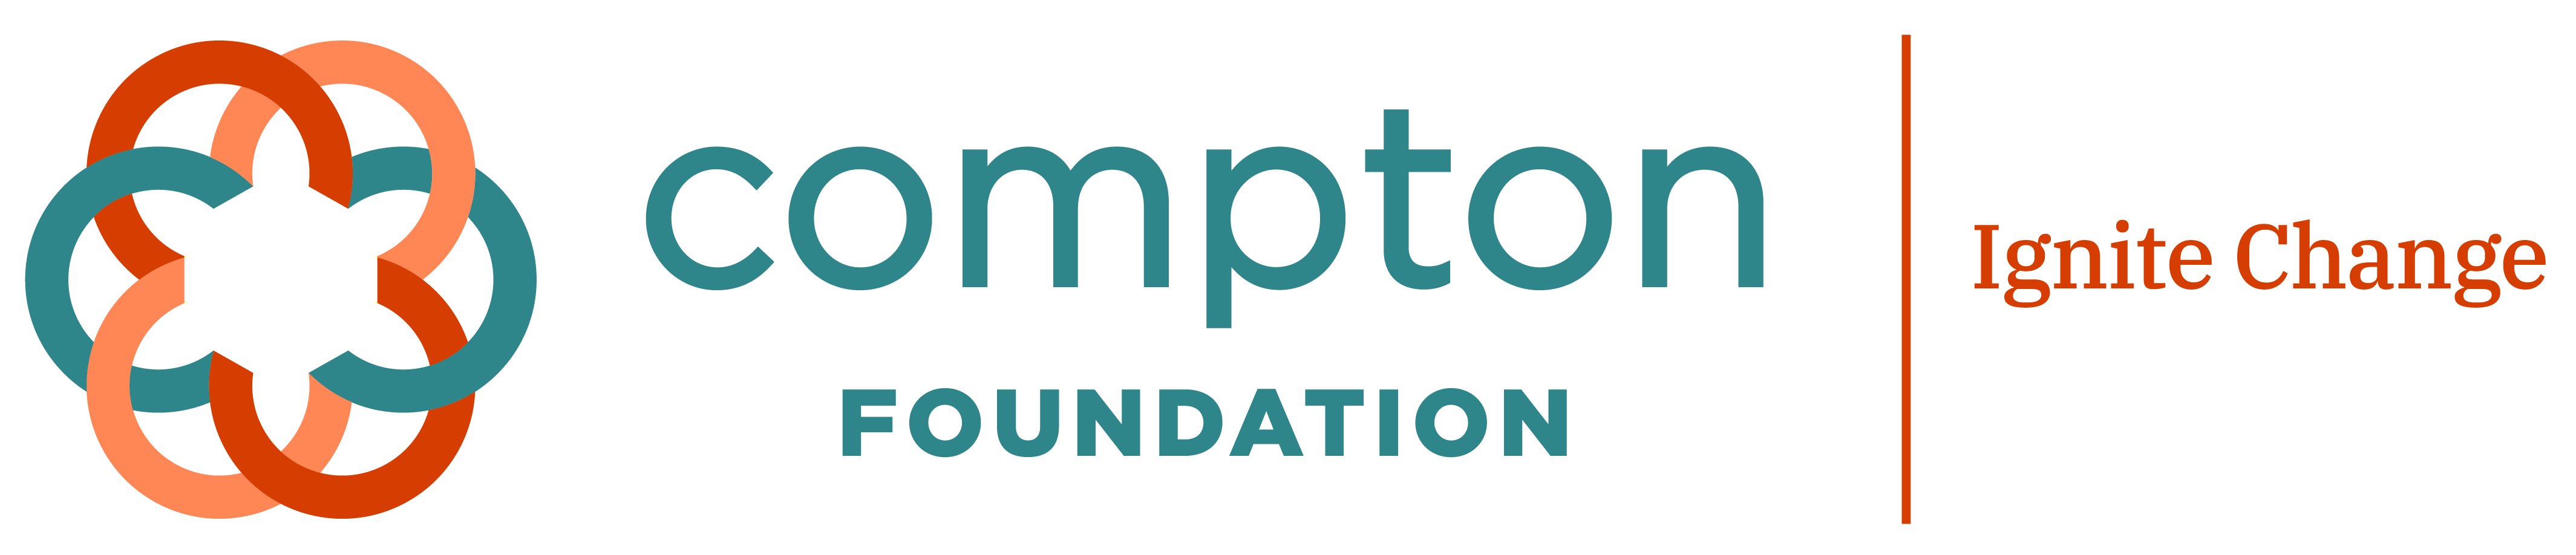 Compton Foundation logo